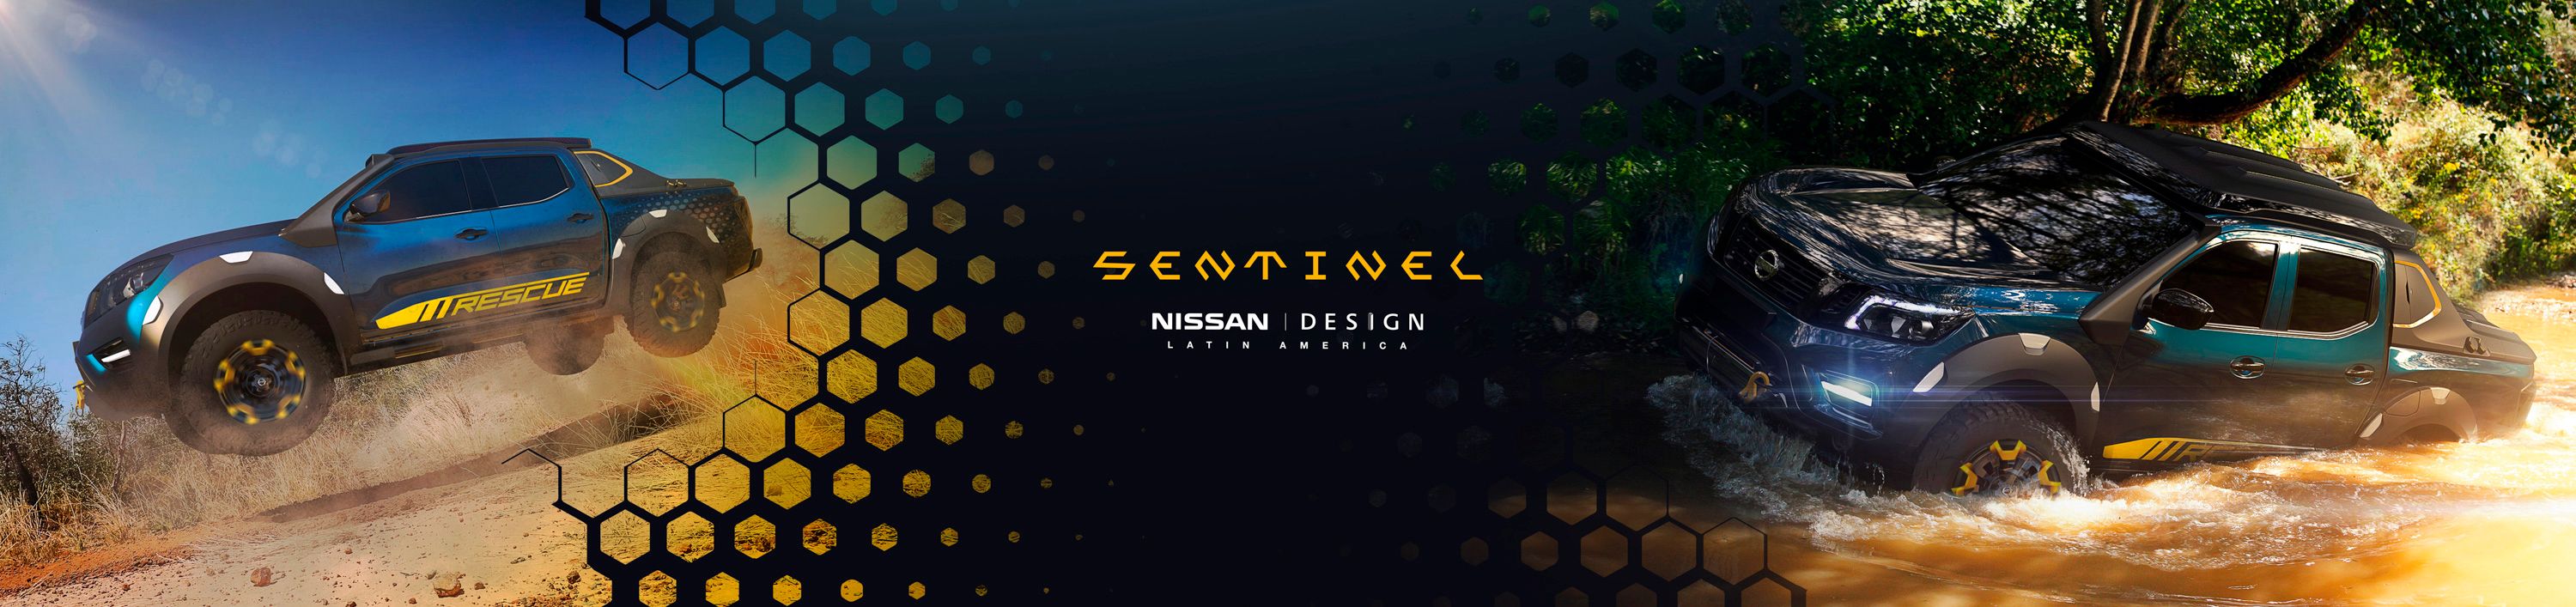 2018 Nissan Frontier Sentinel Concept